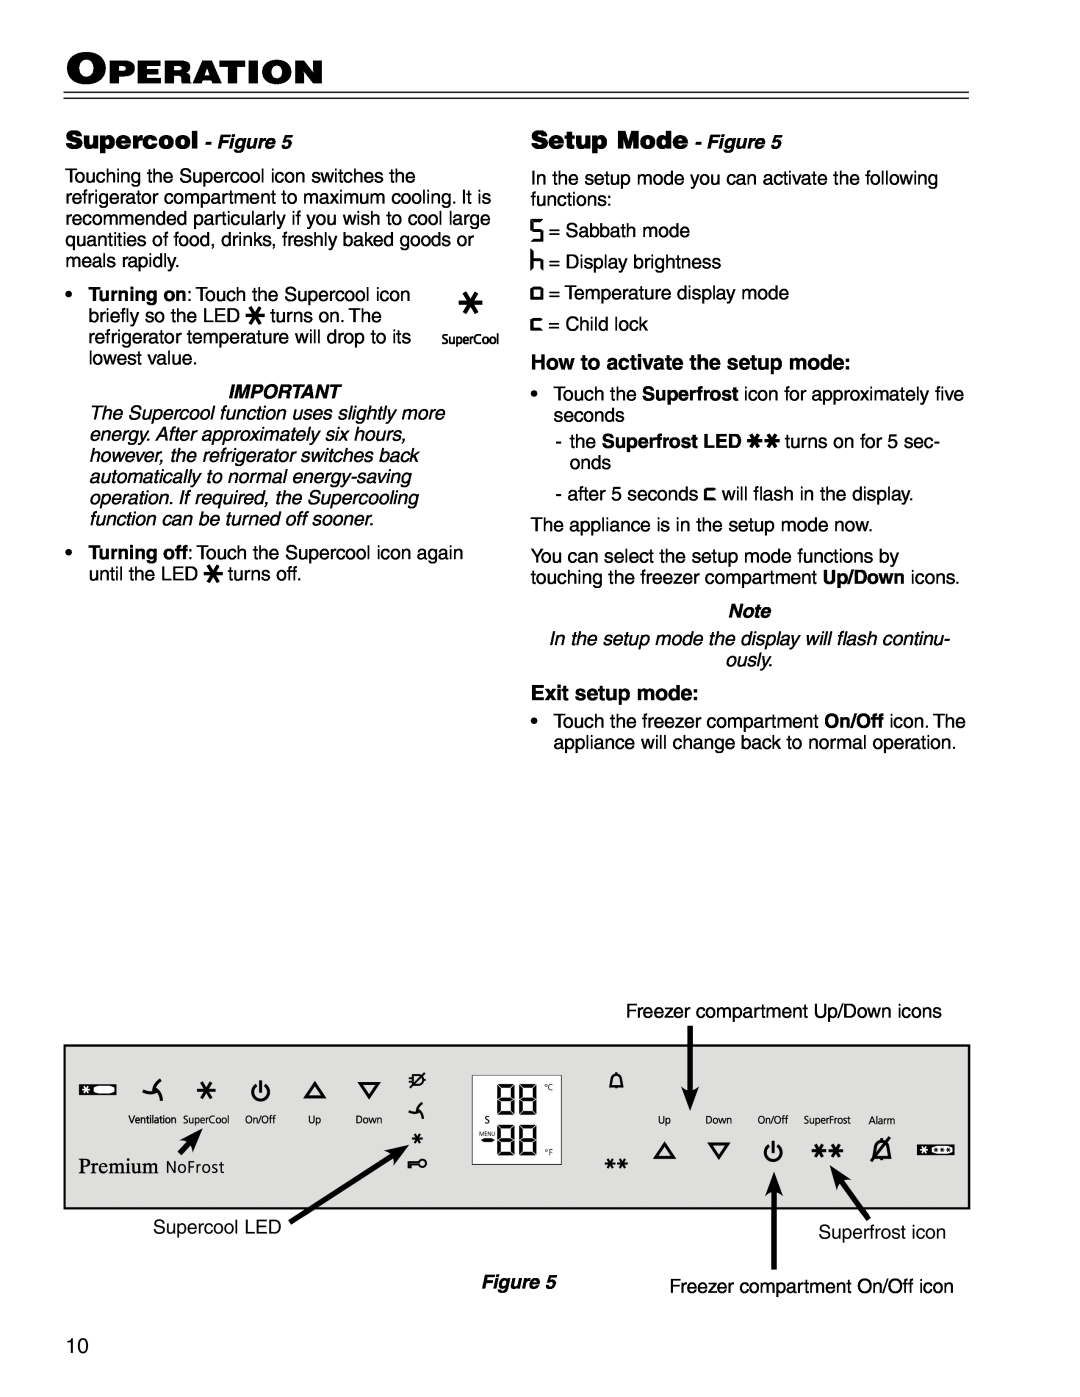 Liebherr CS 1400 7082 663-00 Supercool - Figure, Setup Mode - Figure, How to activate the setup mode, Exit setup mode 